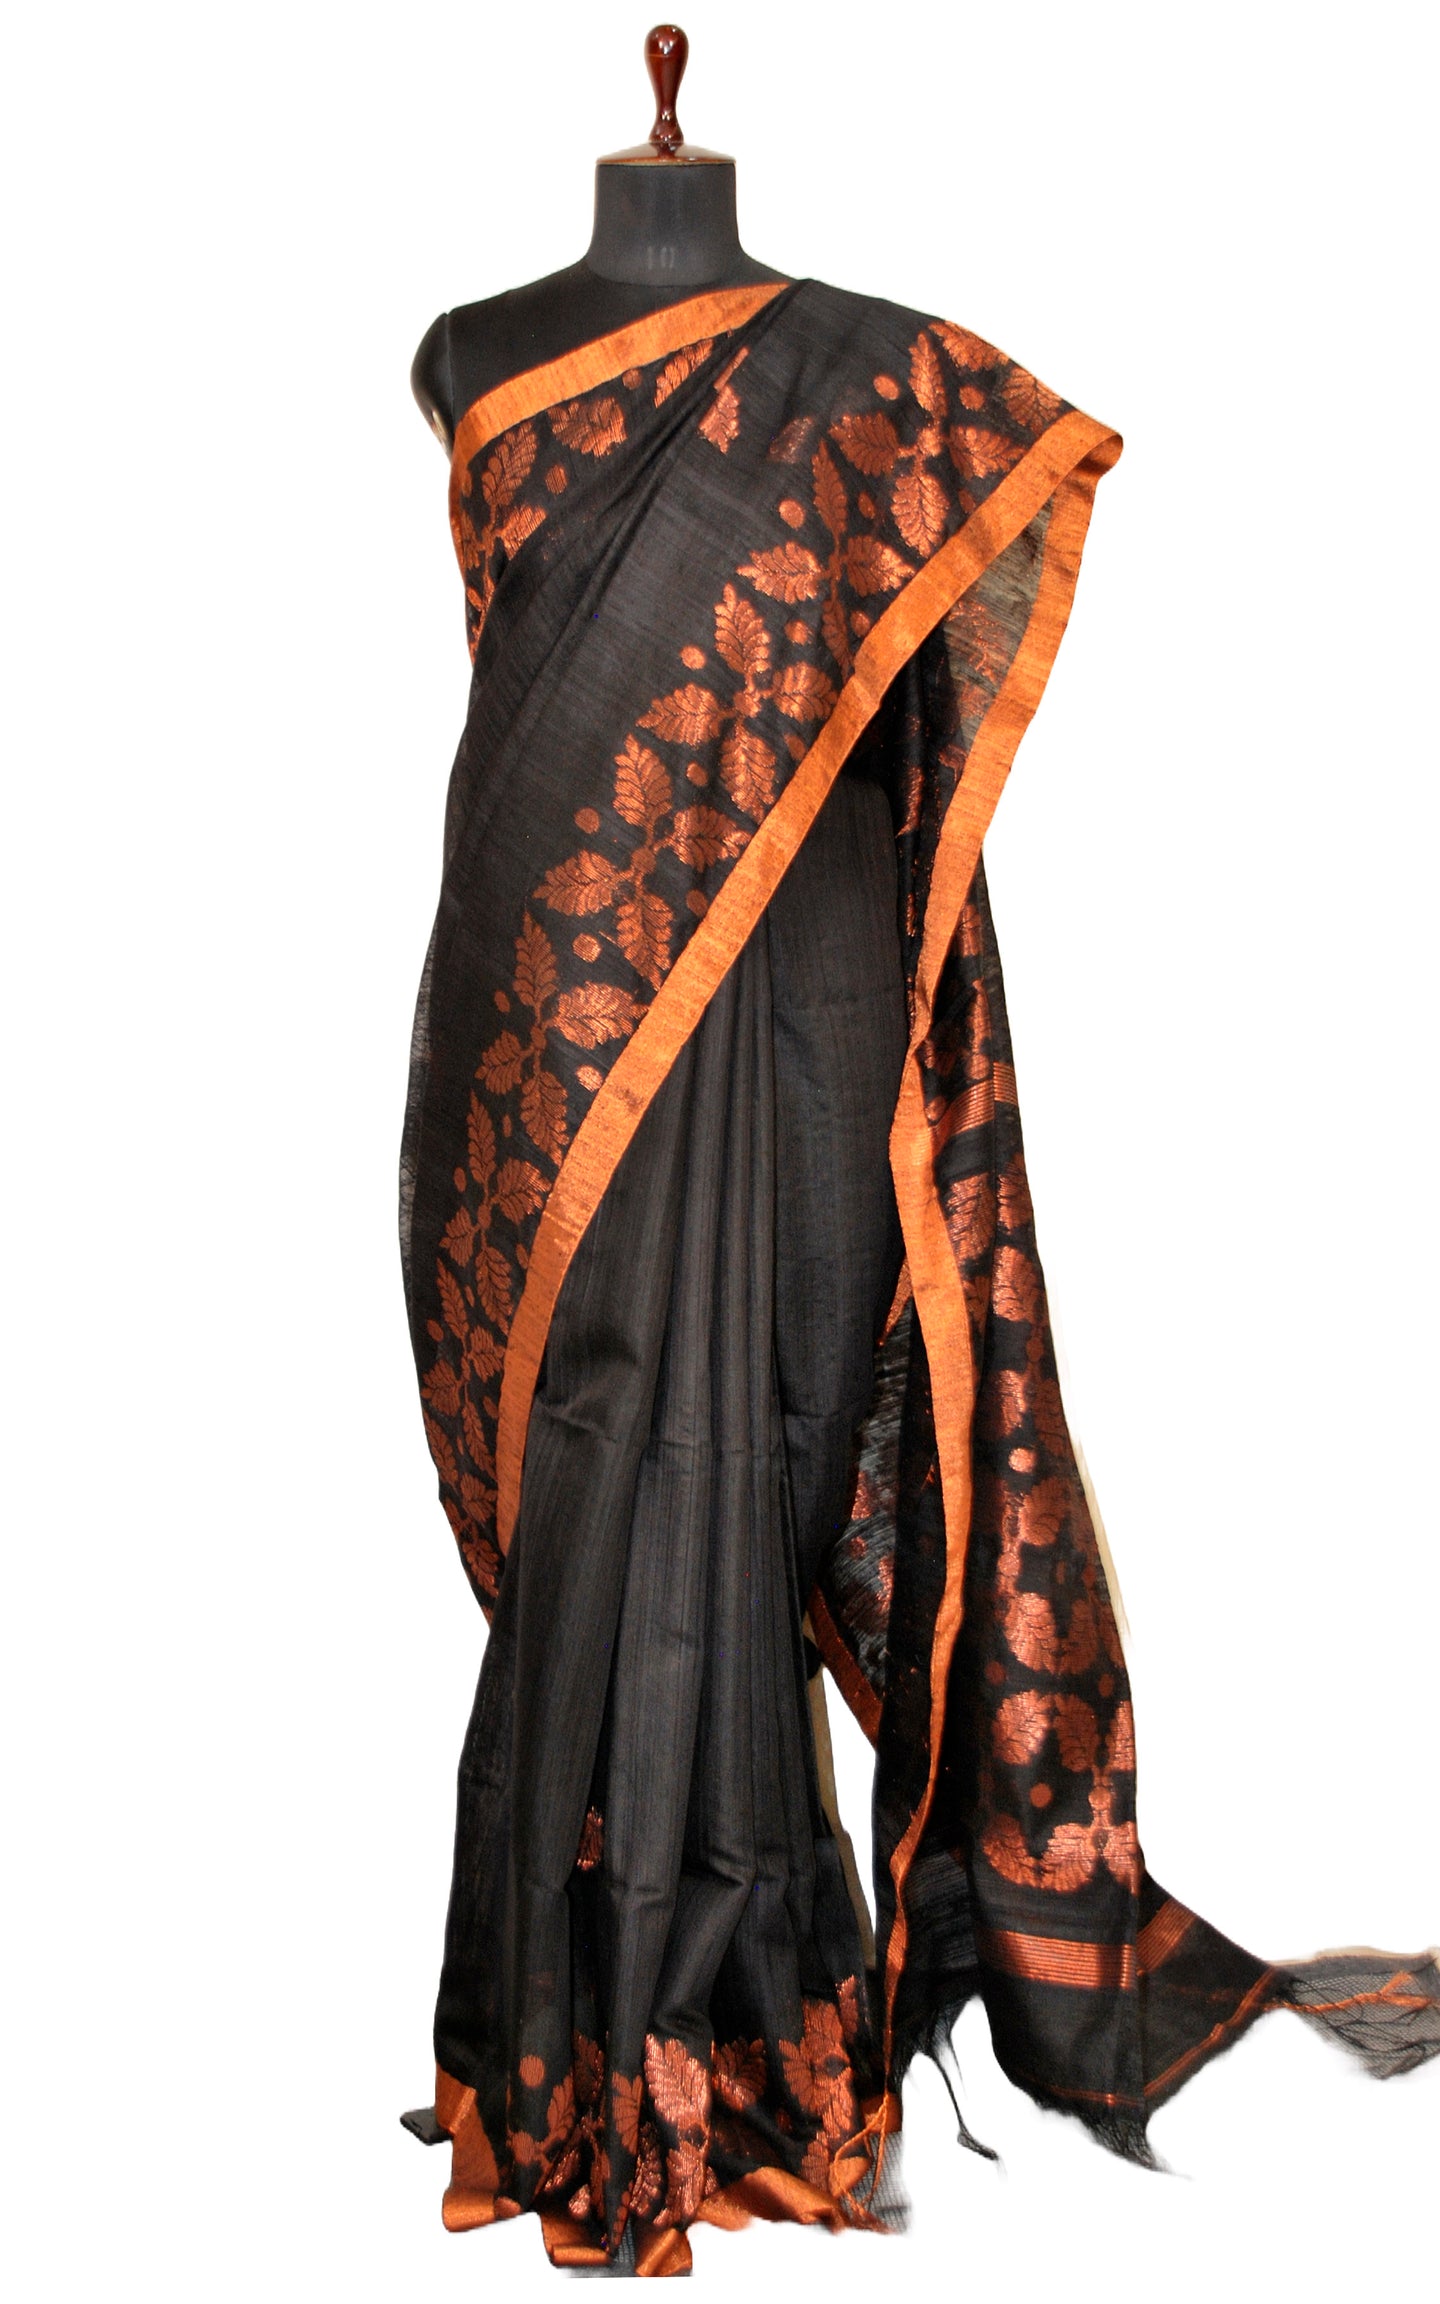 Woven Leaf Work Premium Matka Tussar Silk Jamdani Saree in Black and Copper